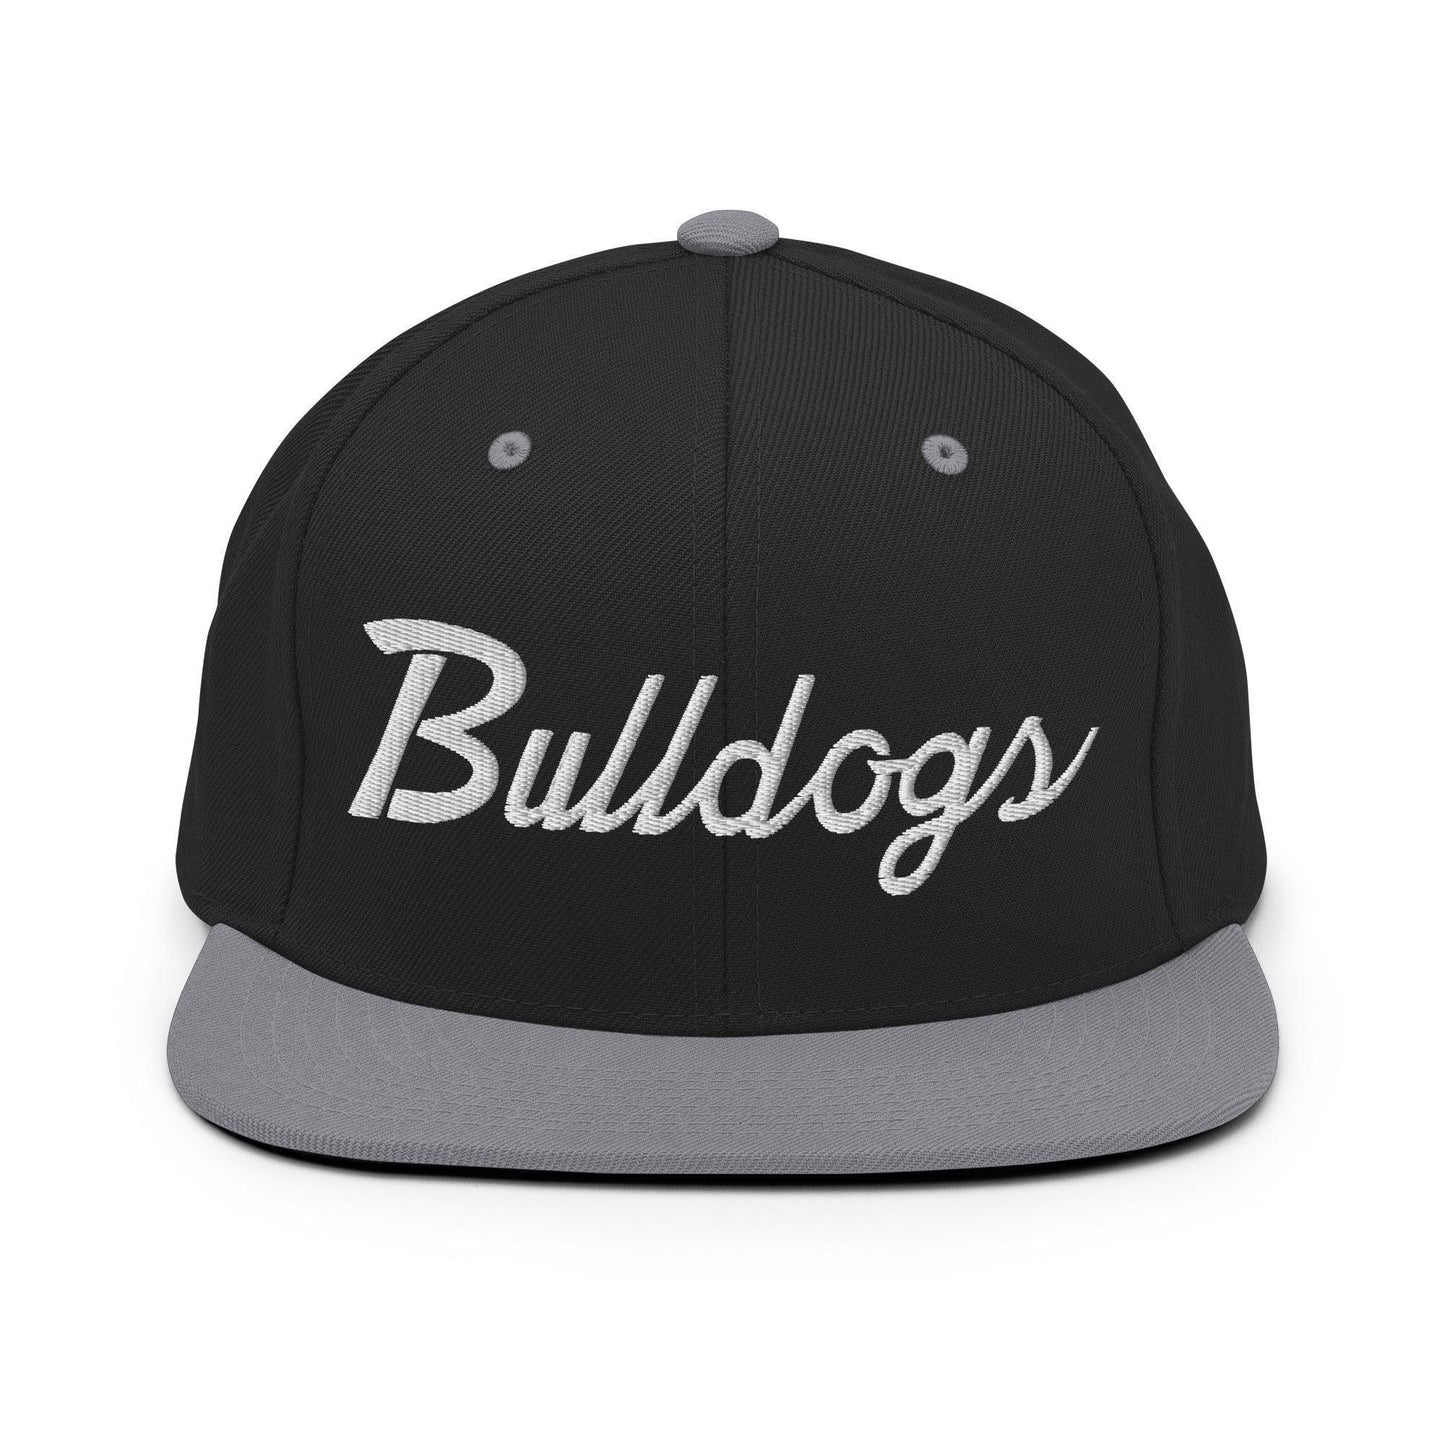 Bulldogs School Mascot Script Snapback Hat Black Silver